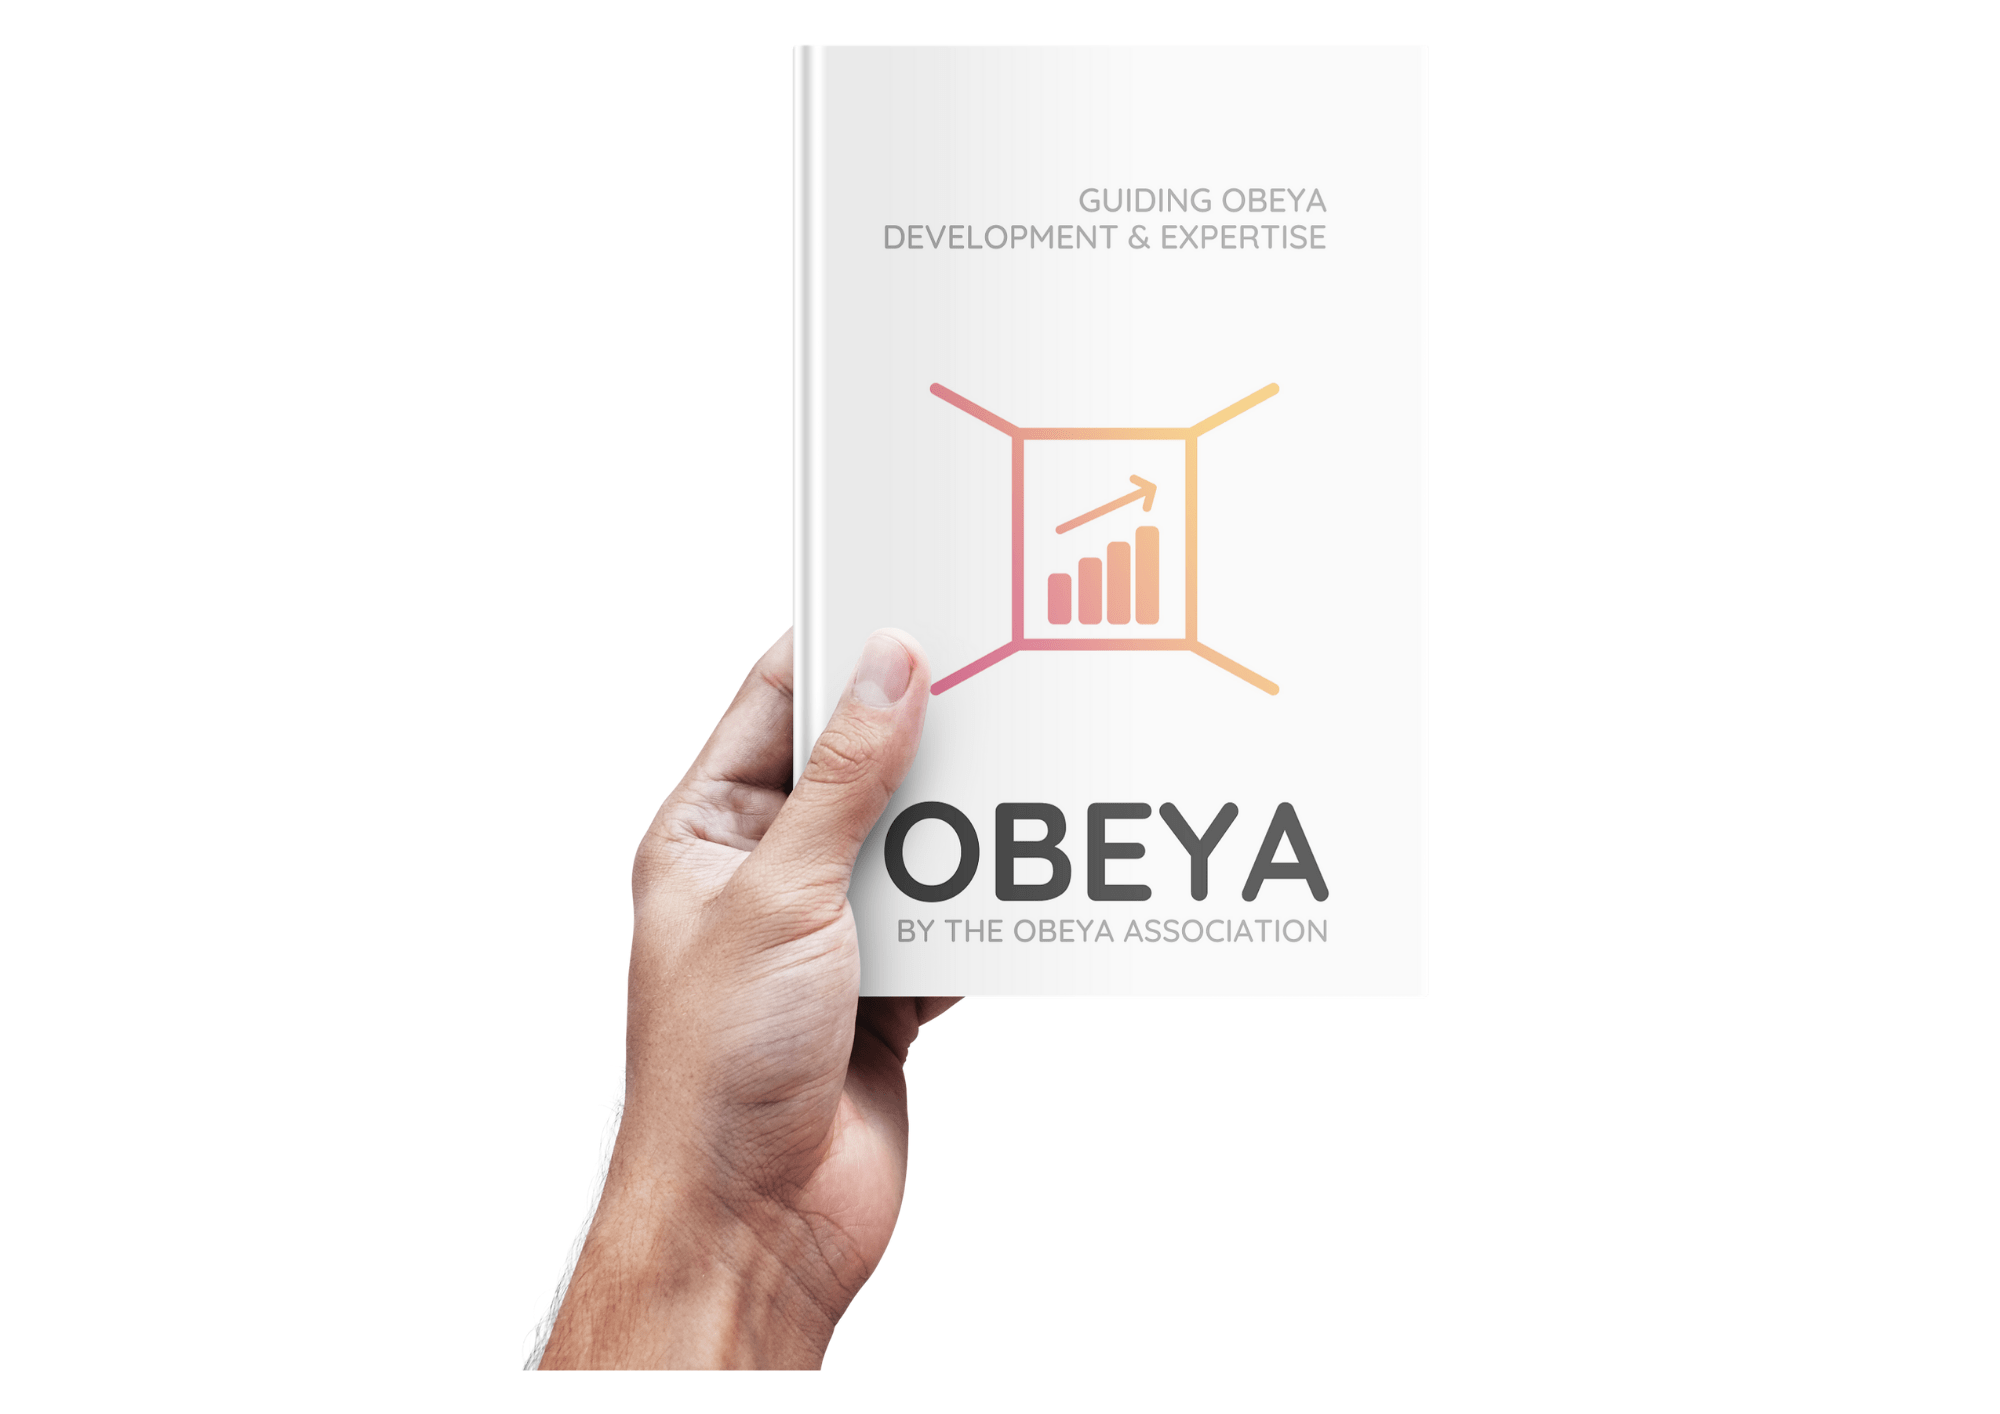 OBEYA - by the Obeya Association